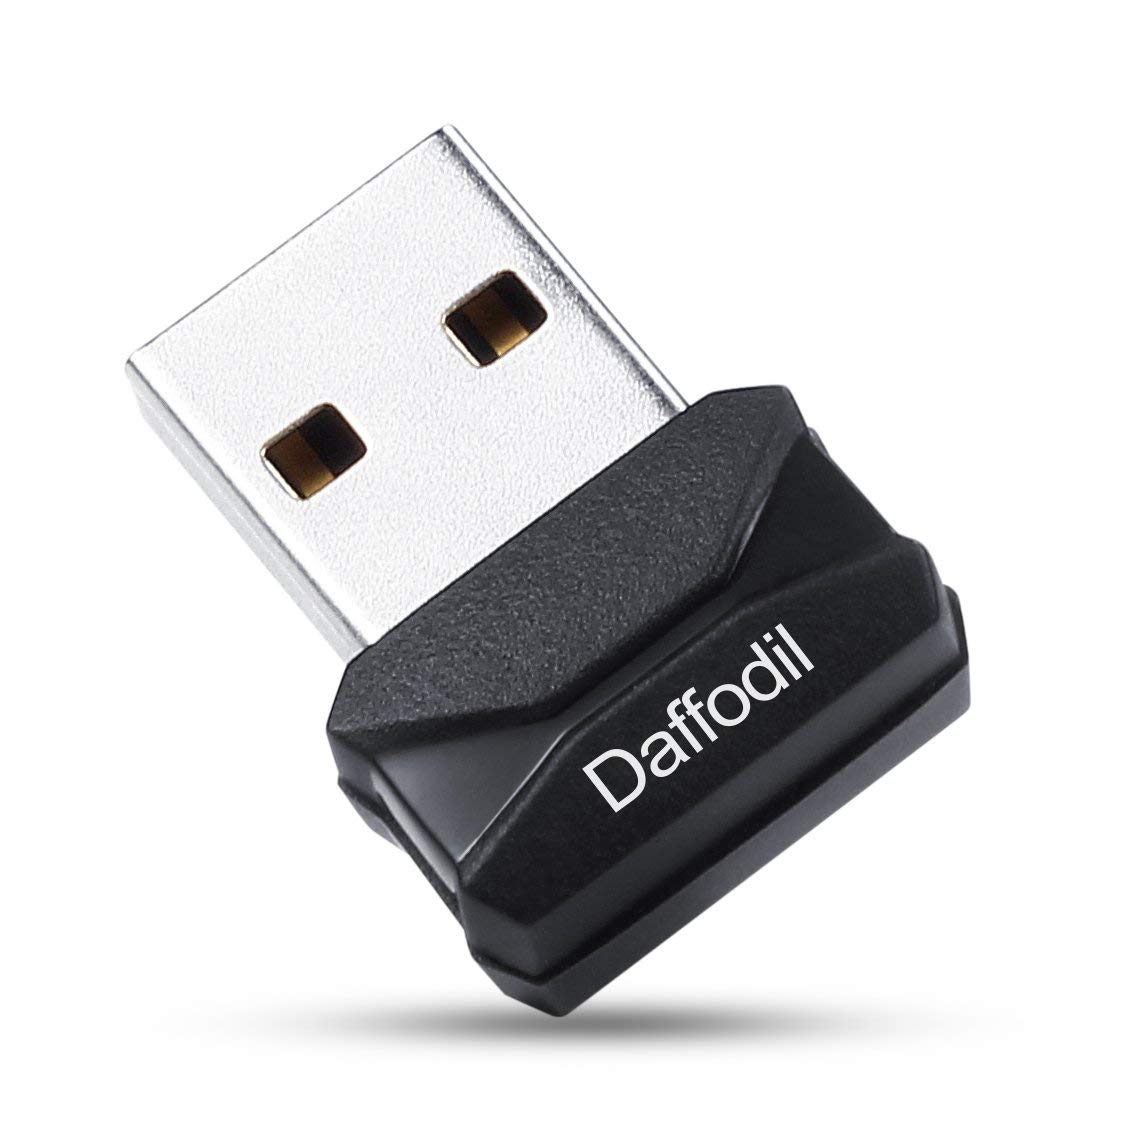 USB Wifi Adapter 150Mbps Wireless Internet Dongle - LAN03